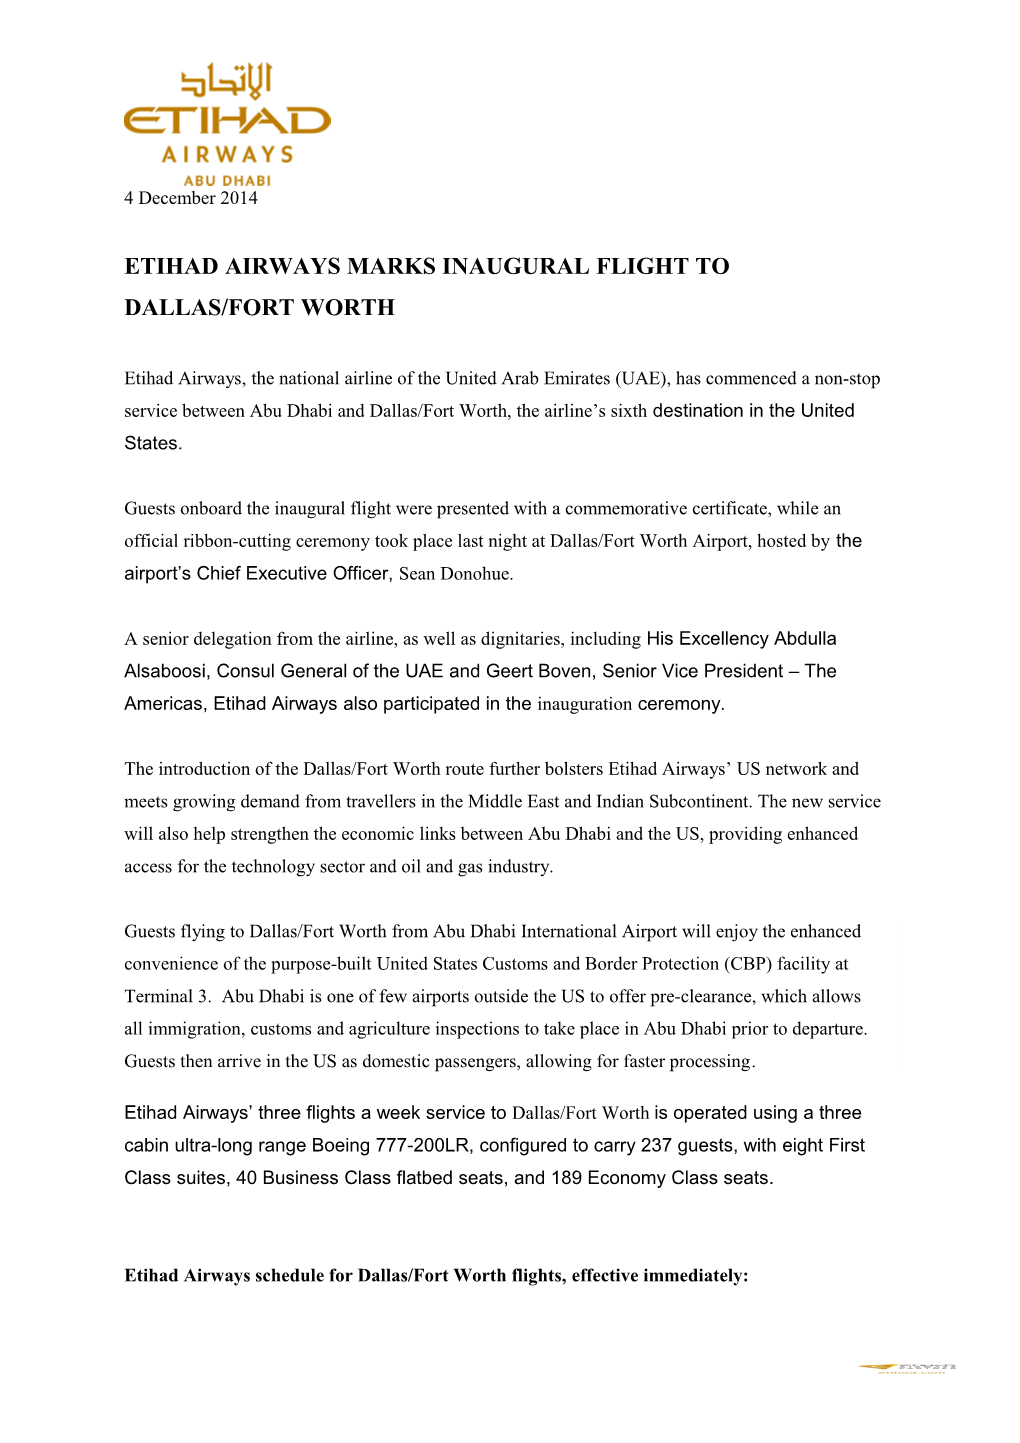 Etihad Airways Marks Inaugural Flight to Dallas/Fort Worth